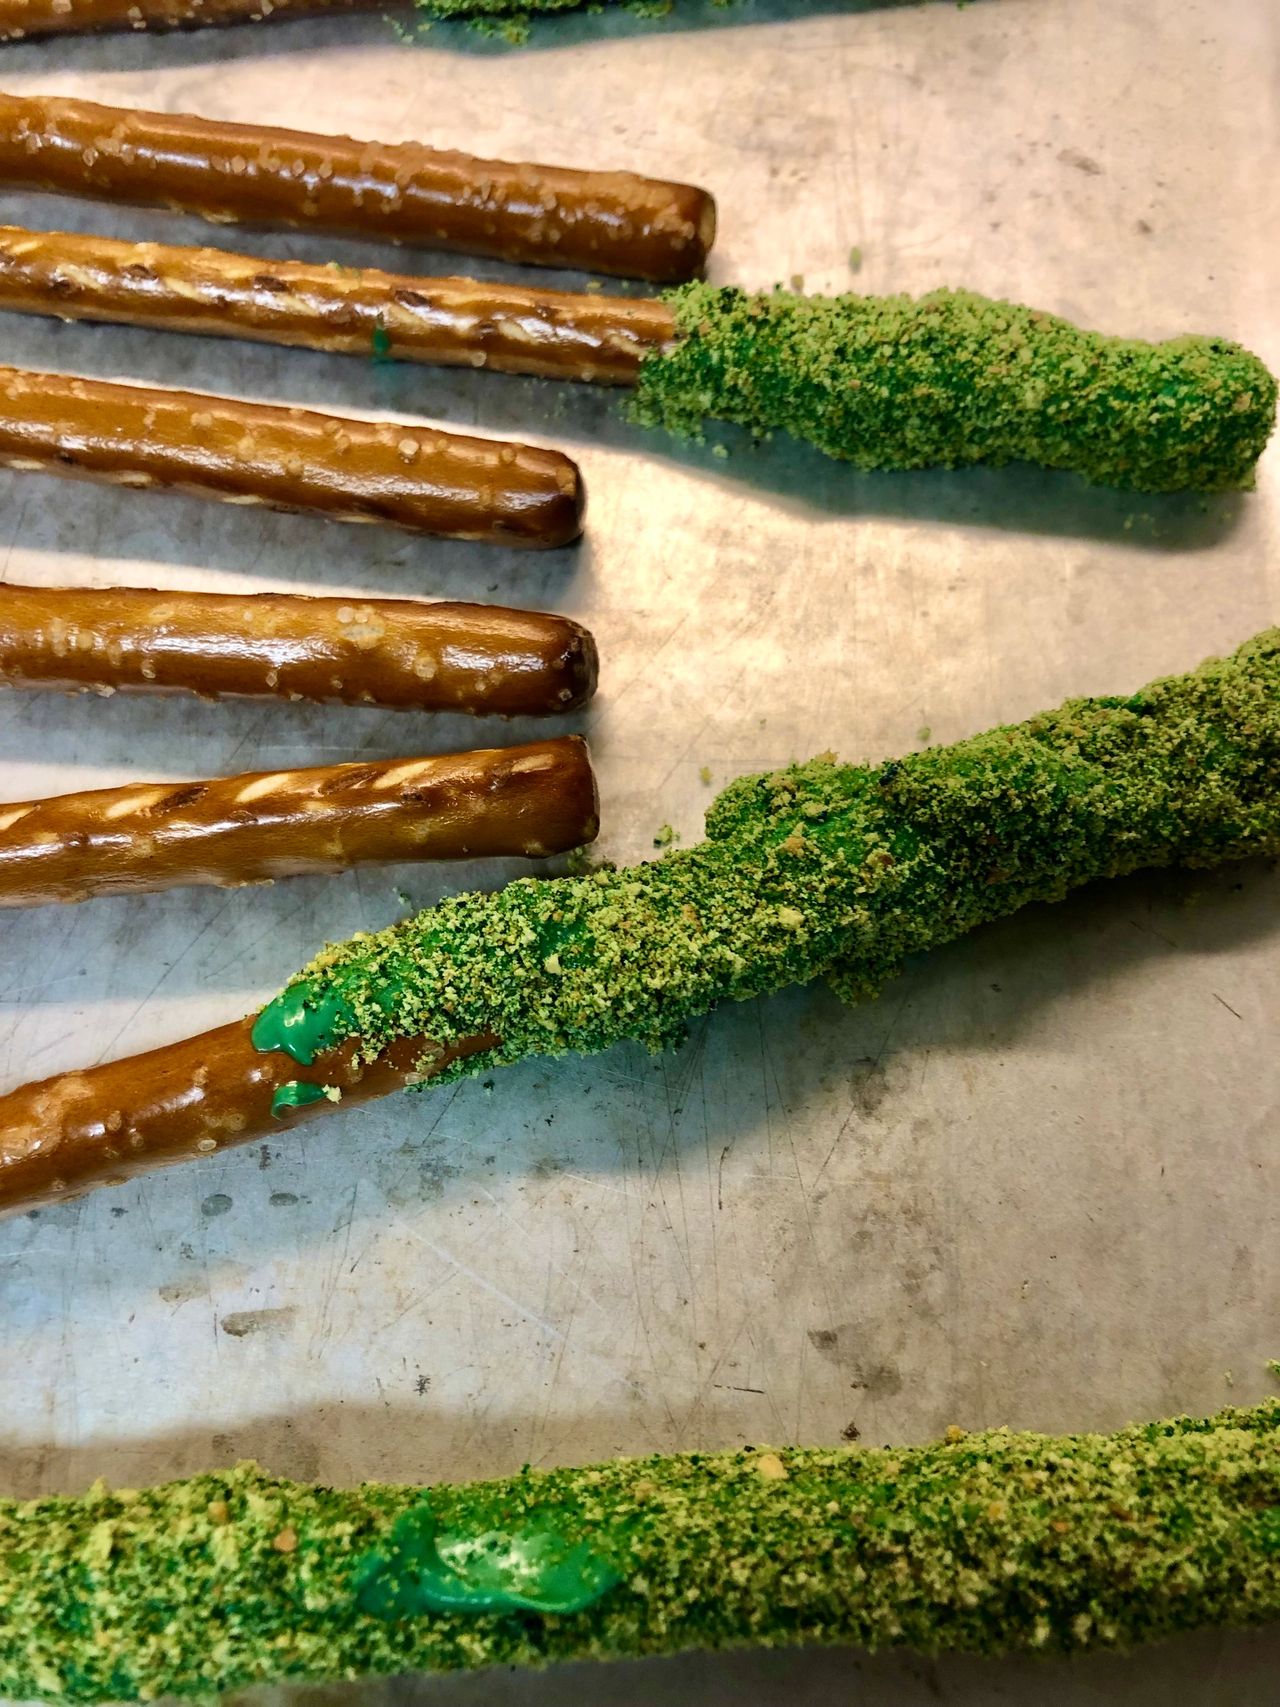 Moss-covered pretzel rods in progress.